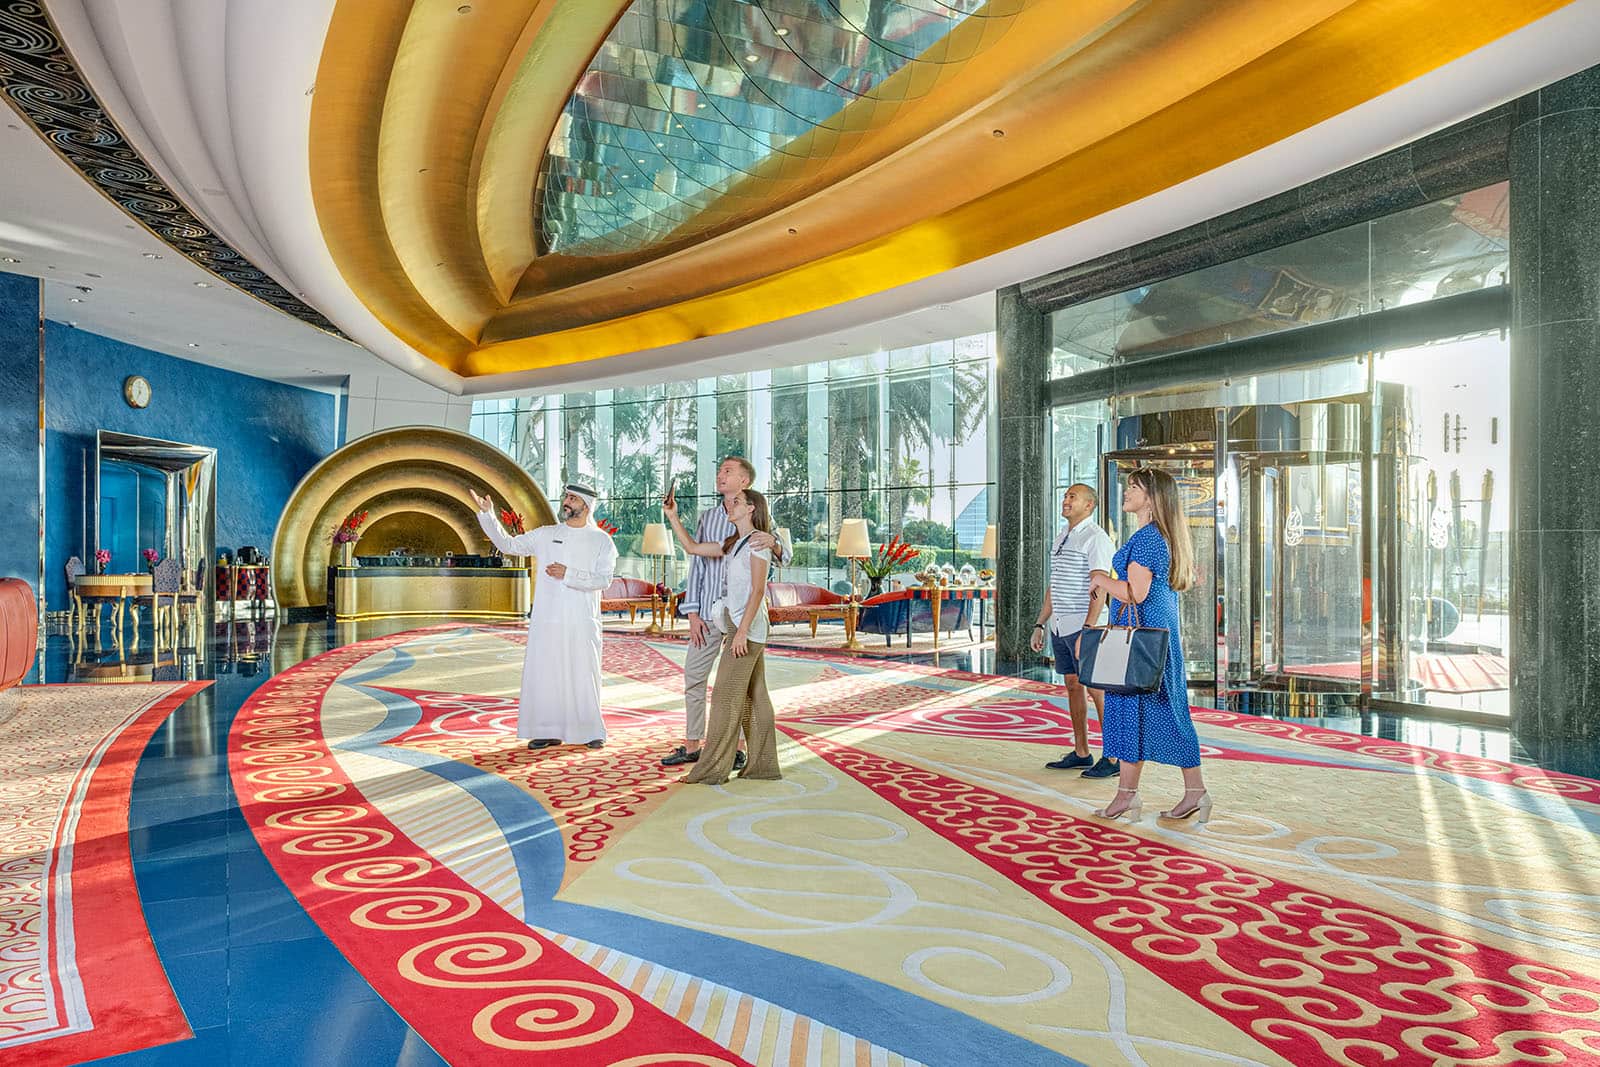 Burj Al Arab Hotel Interior